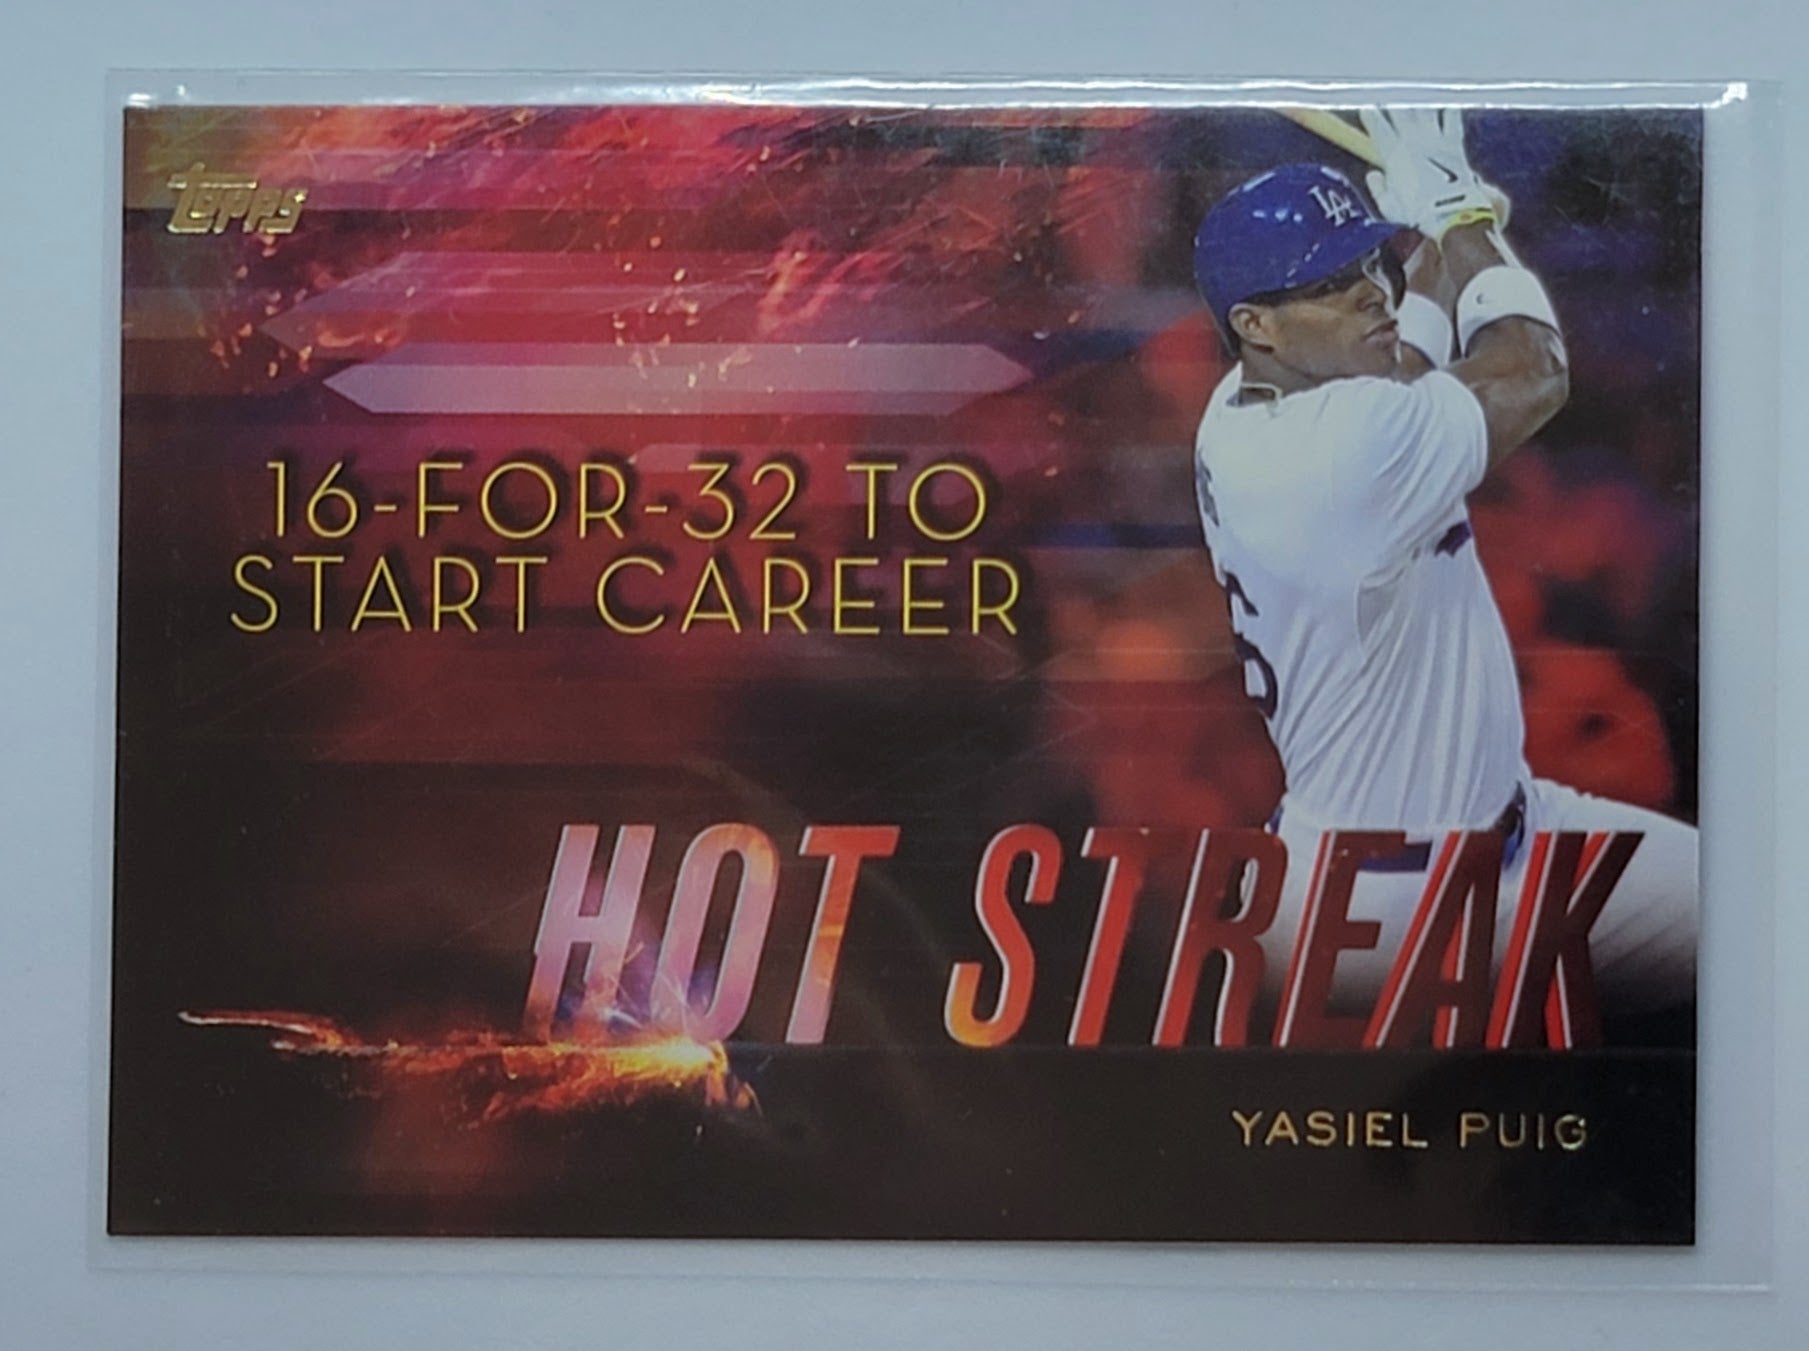 2015 Topps Yasiel Puig Hot
  Streak  Baseball Card  TH13C simple Xclusive Collectibles   